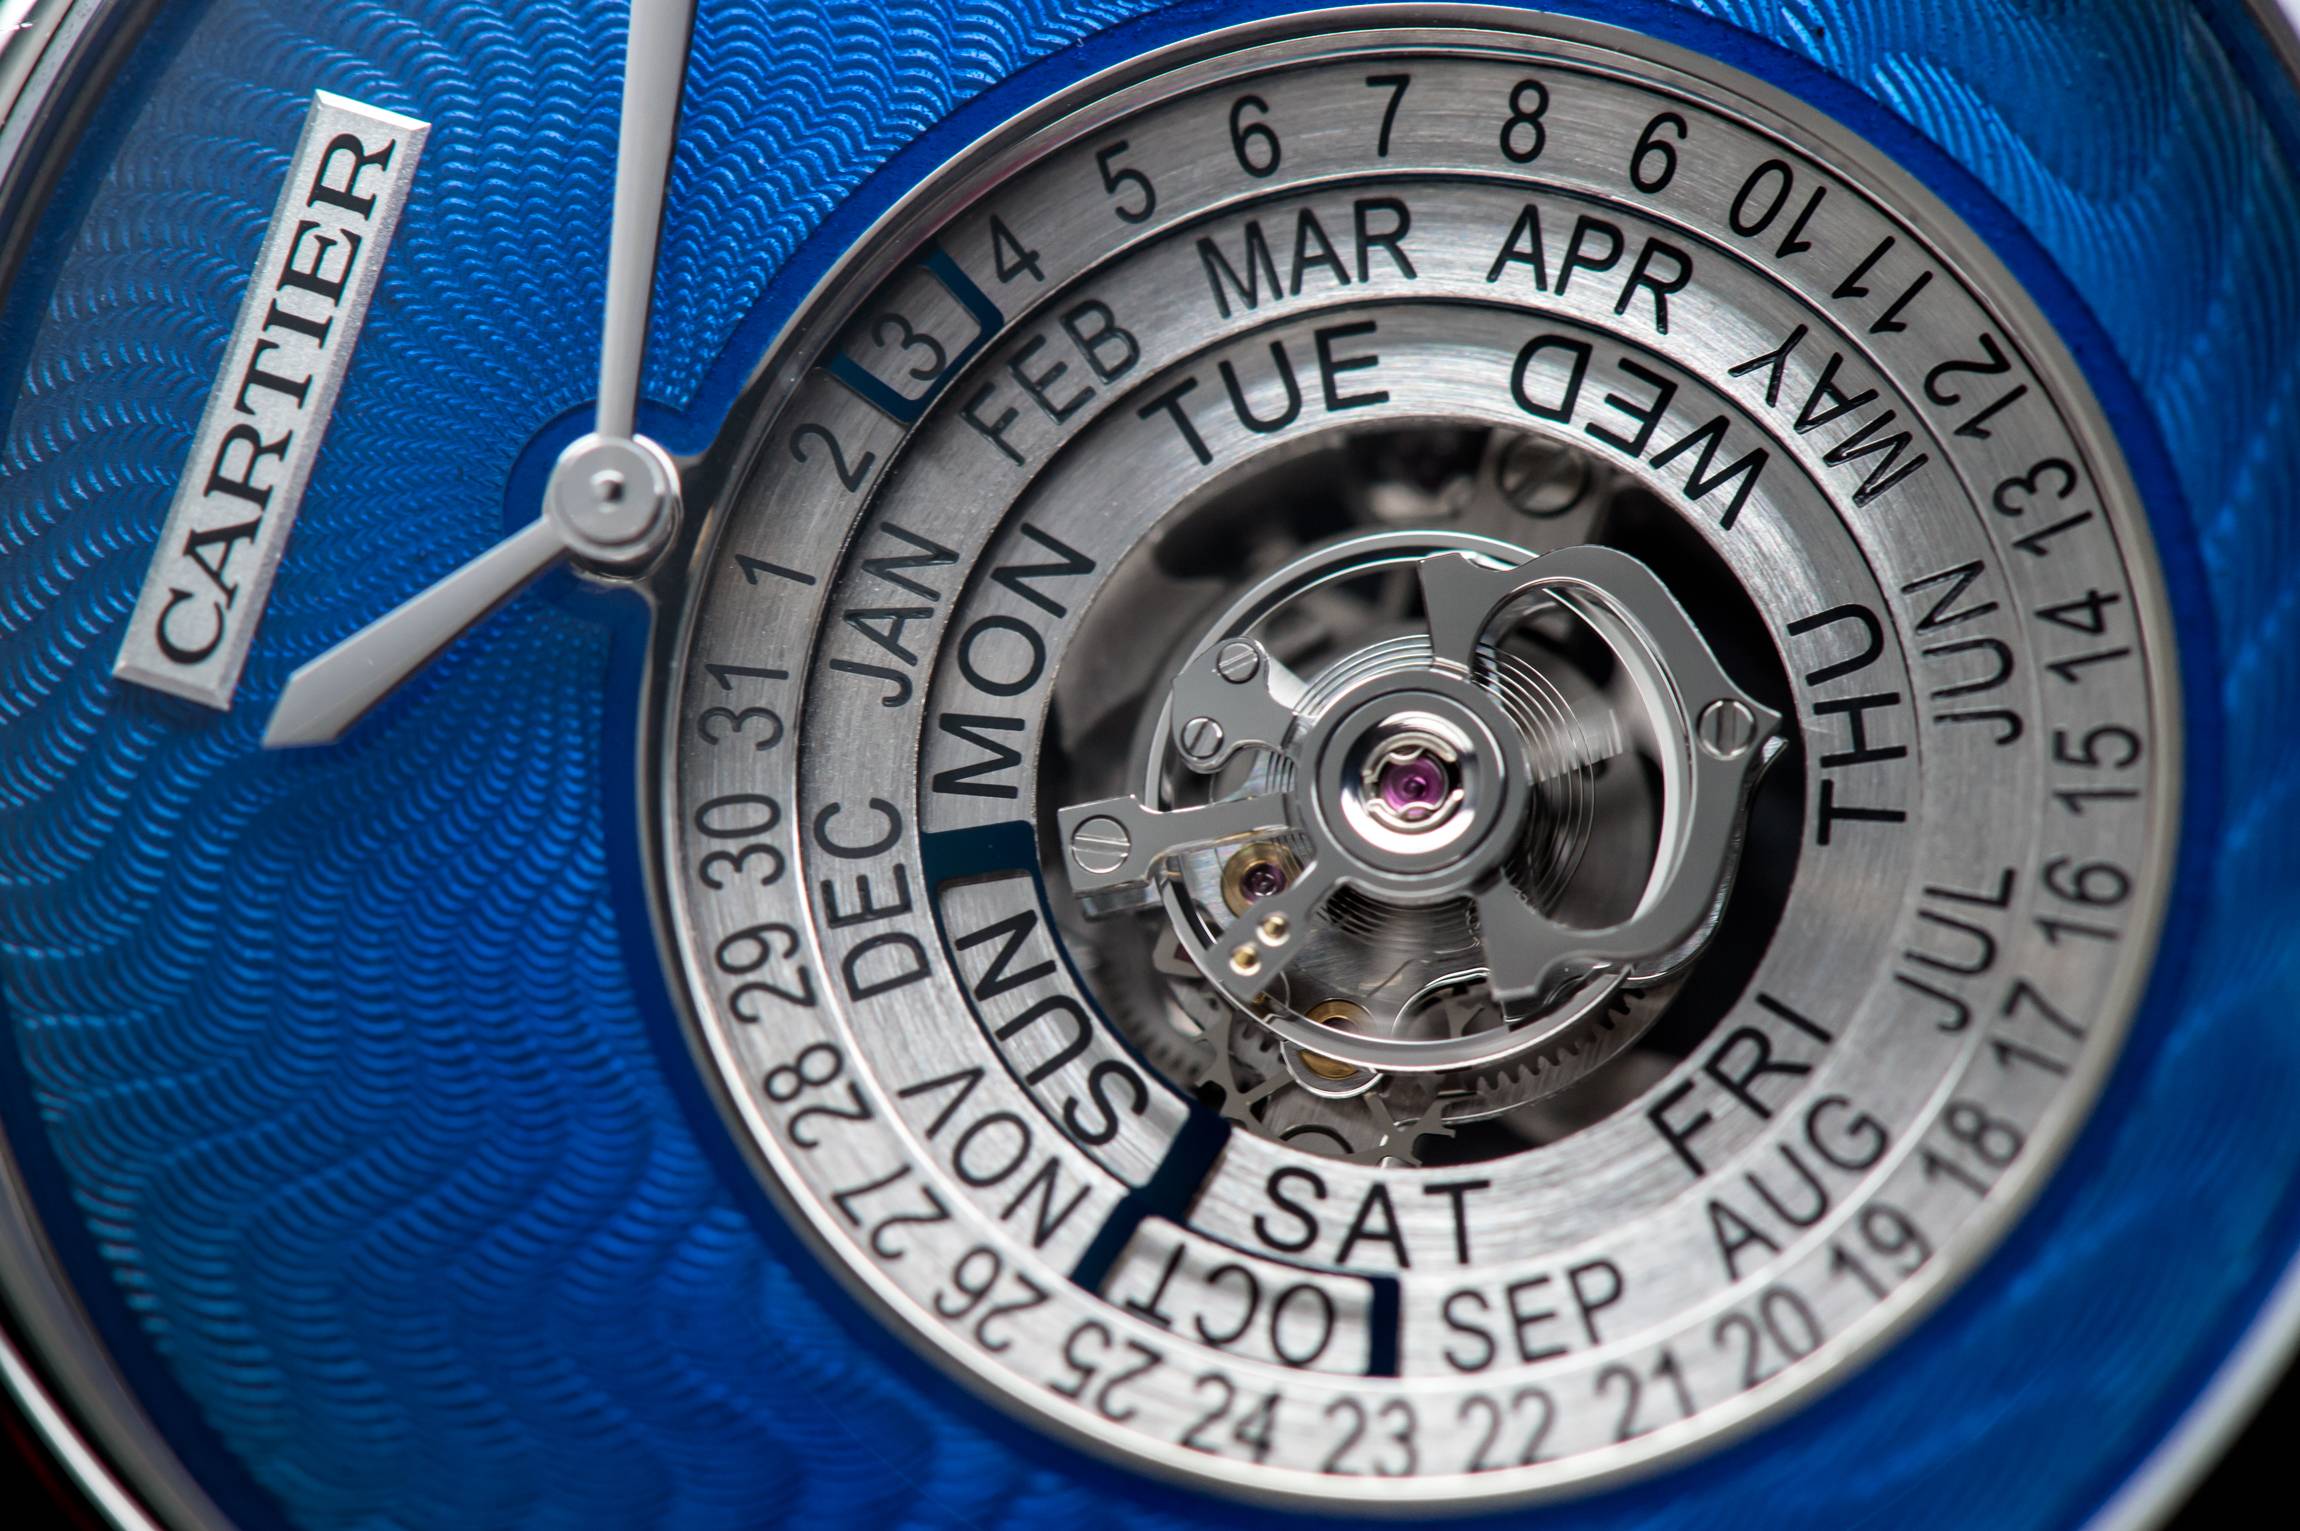 Cartier Rotonde de Cartier Astrocalendaire, Tourbillon complication, perpetual calendar with circular display Calibre 9459 MC "Poinçon de genève" certified watch close up 2